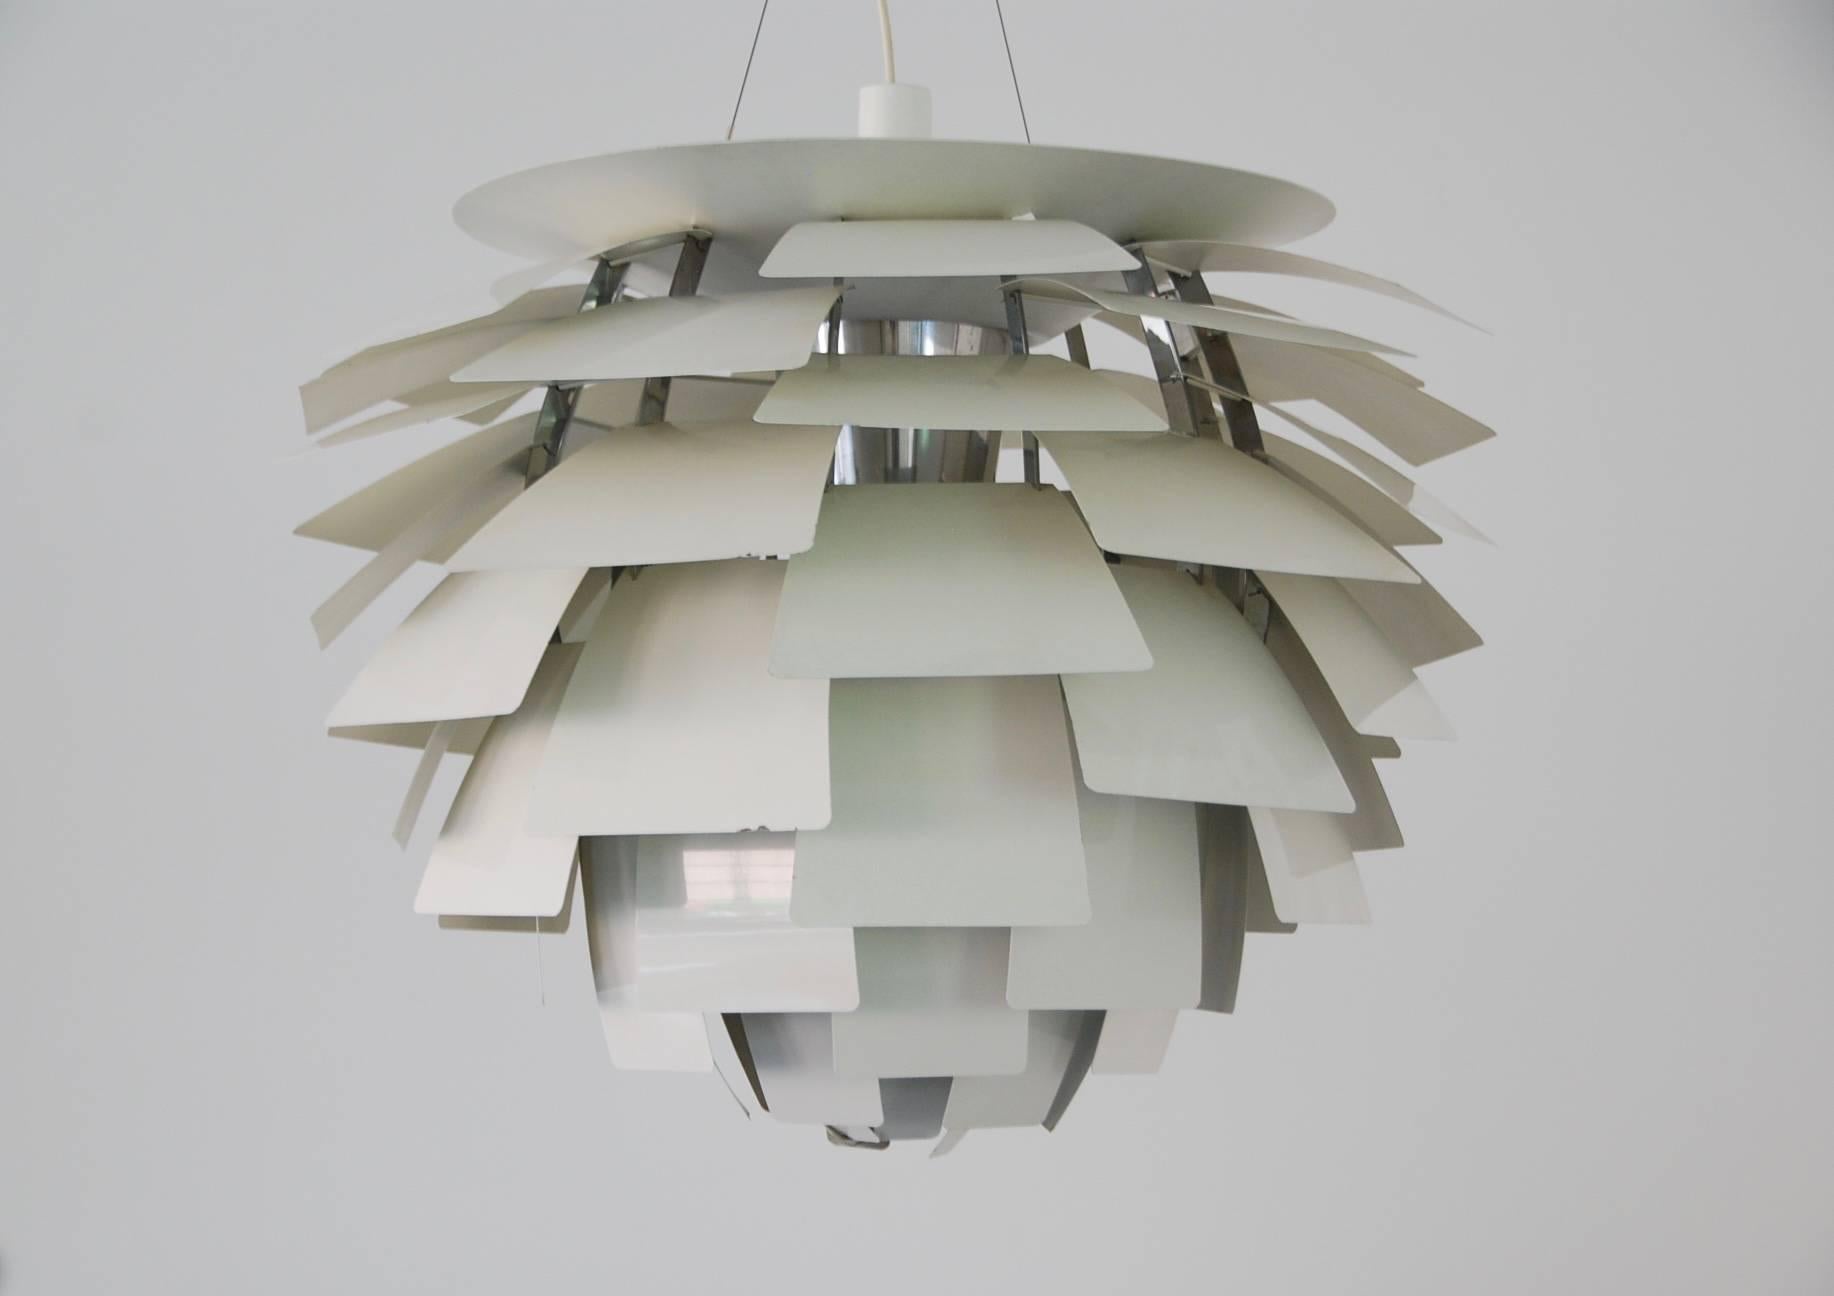 This ceiling lamp model 